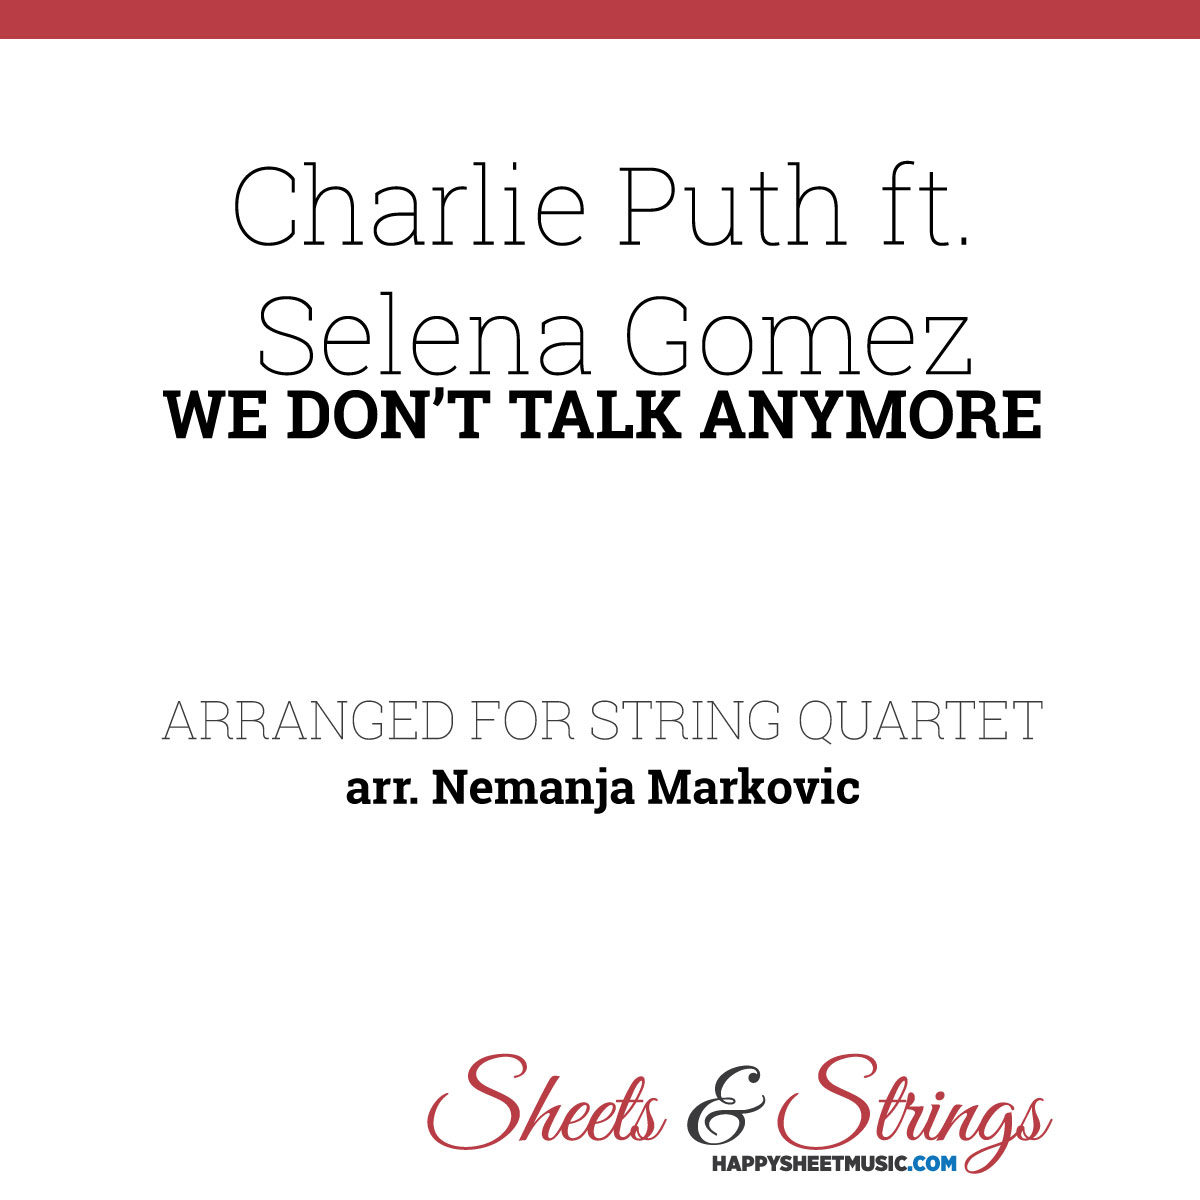 Charlie Puth ft. Selena Gomez - We Don't Talk Anymore - Sheet Music for String Quartet - Music Arrangement for String Quartet